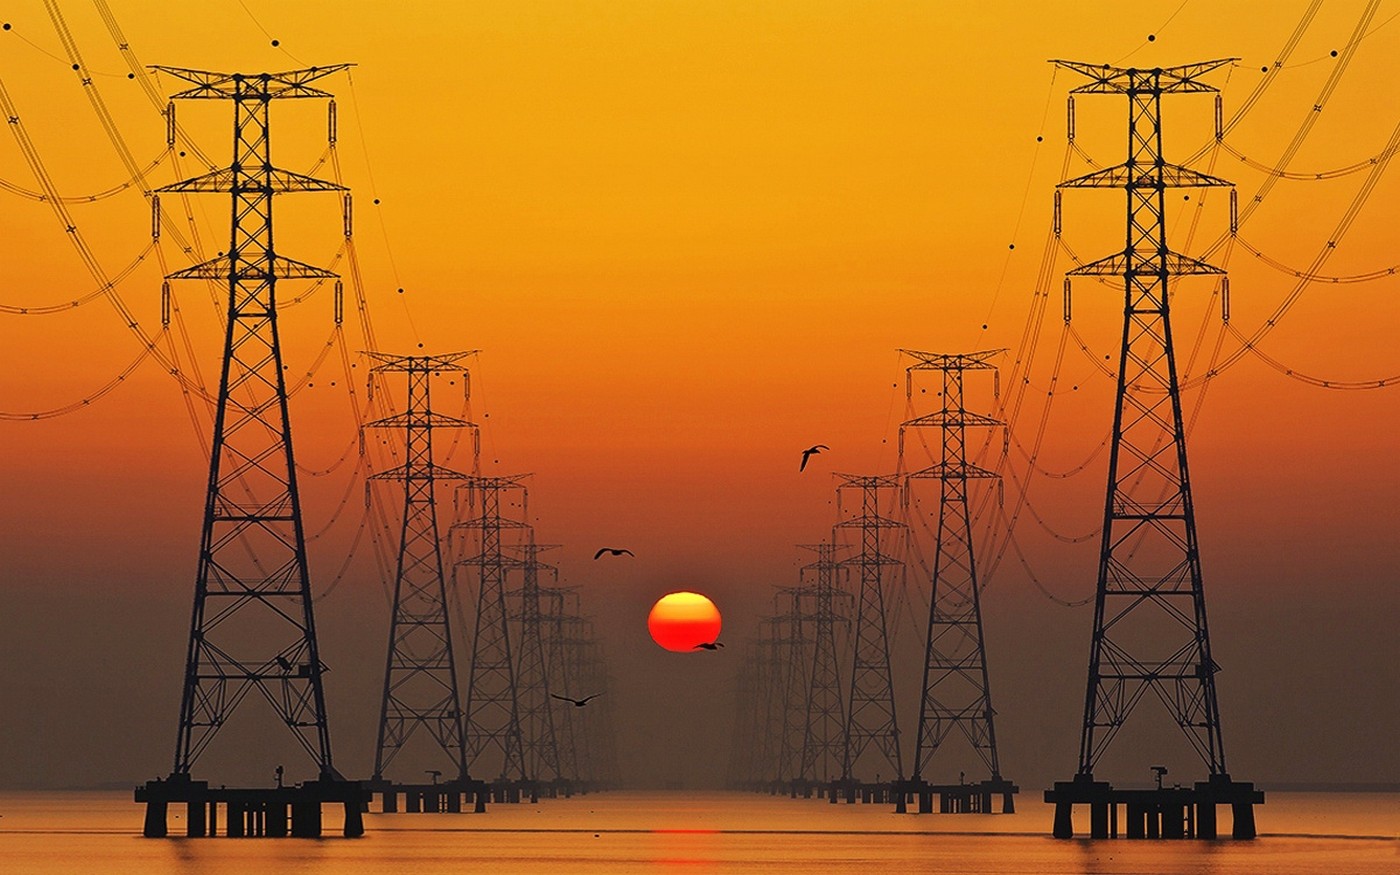 General 1400x875 lake birds power lines flying electricity tower red orange mist yellow South Korea utility pole Asia pylon